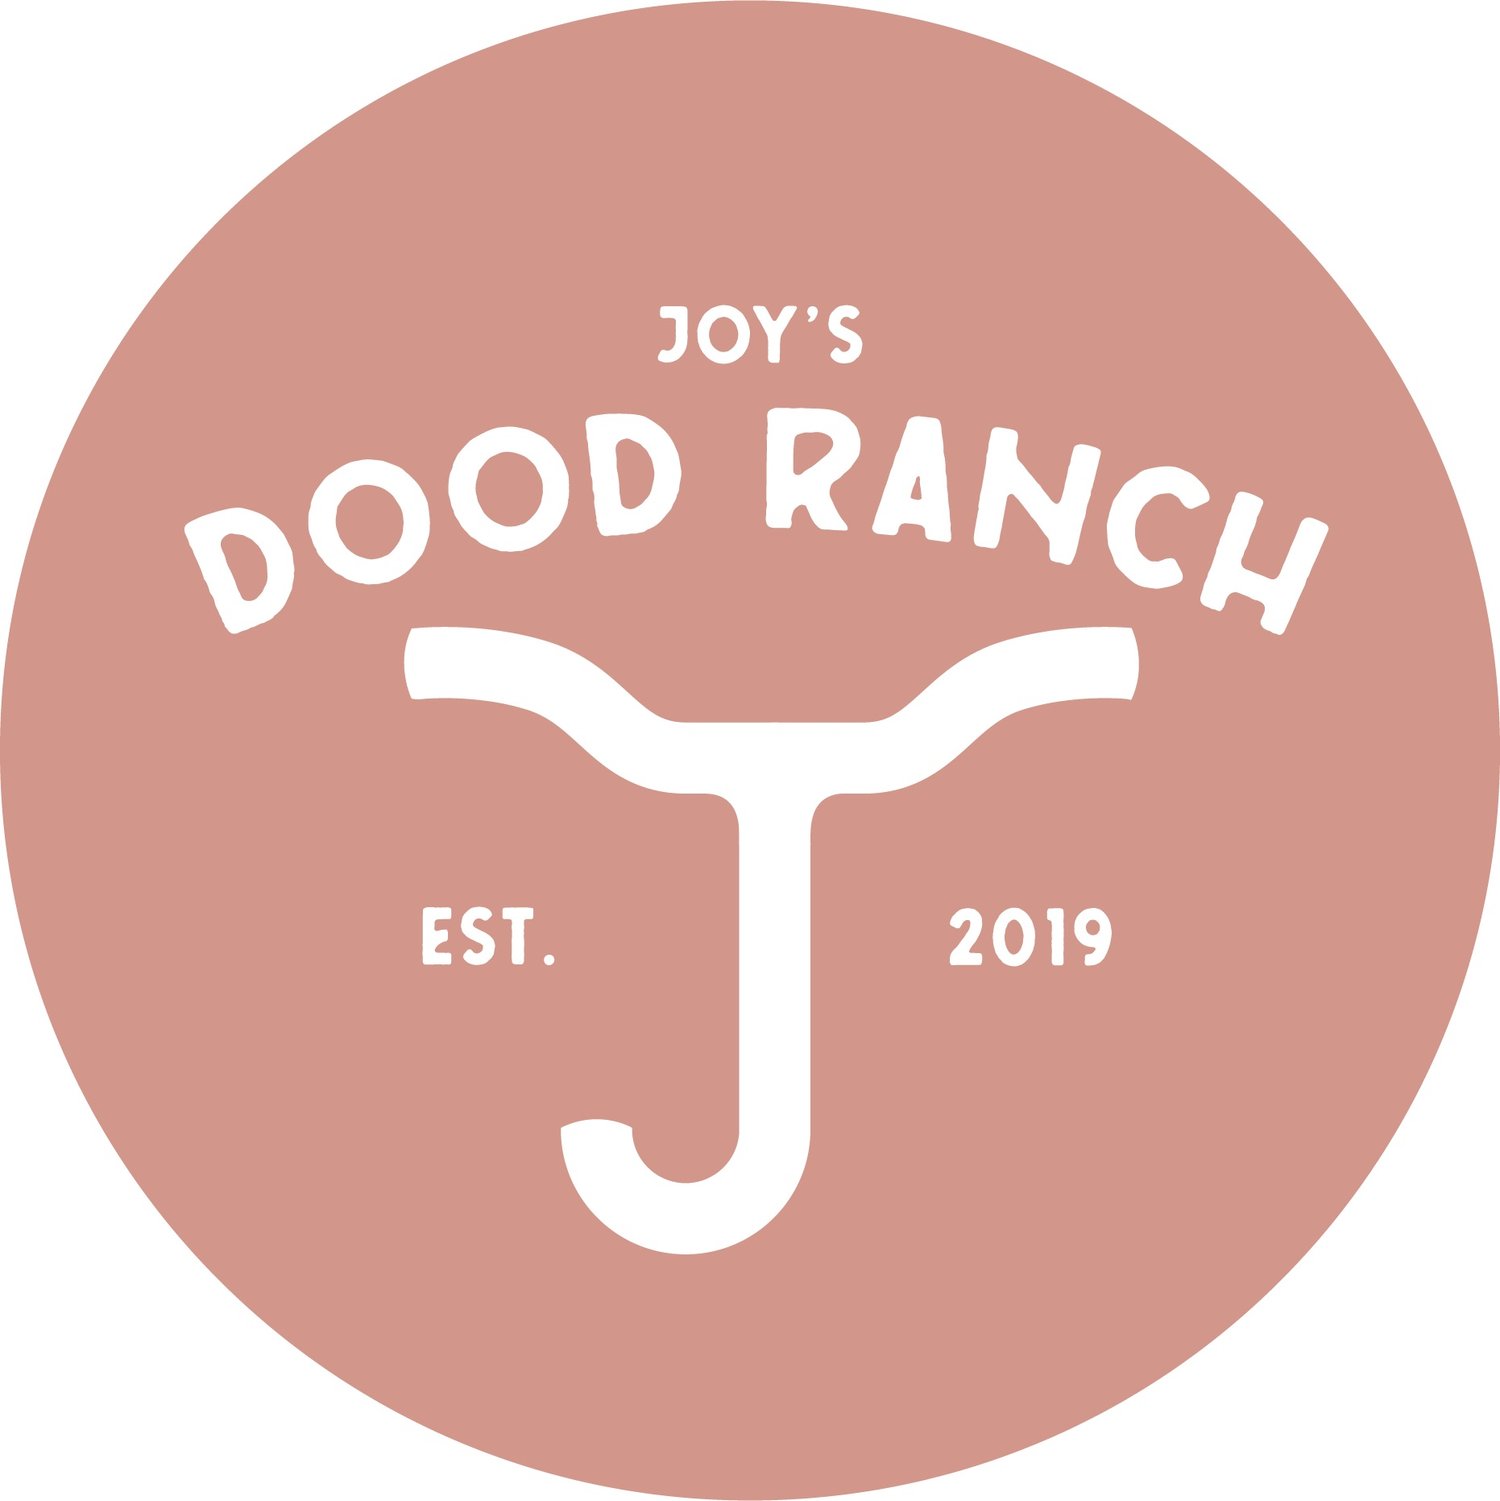 Joy’s Dood Ranch